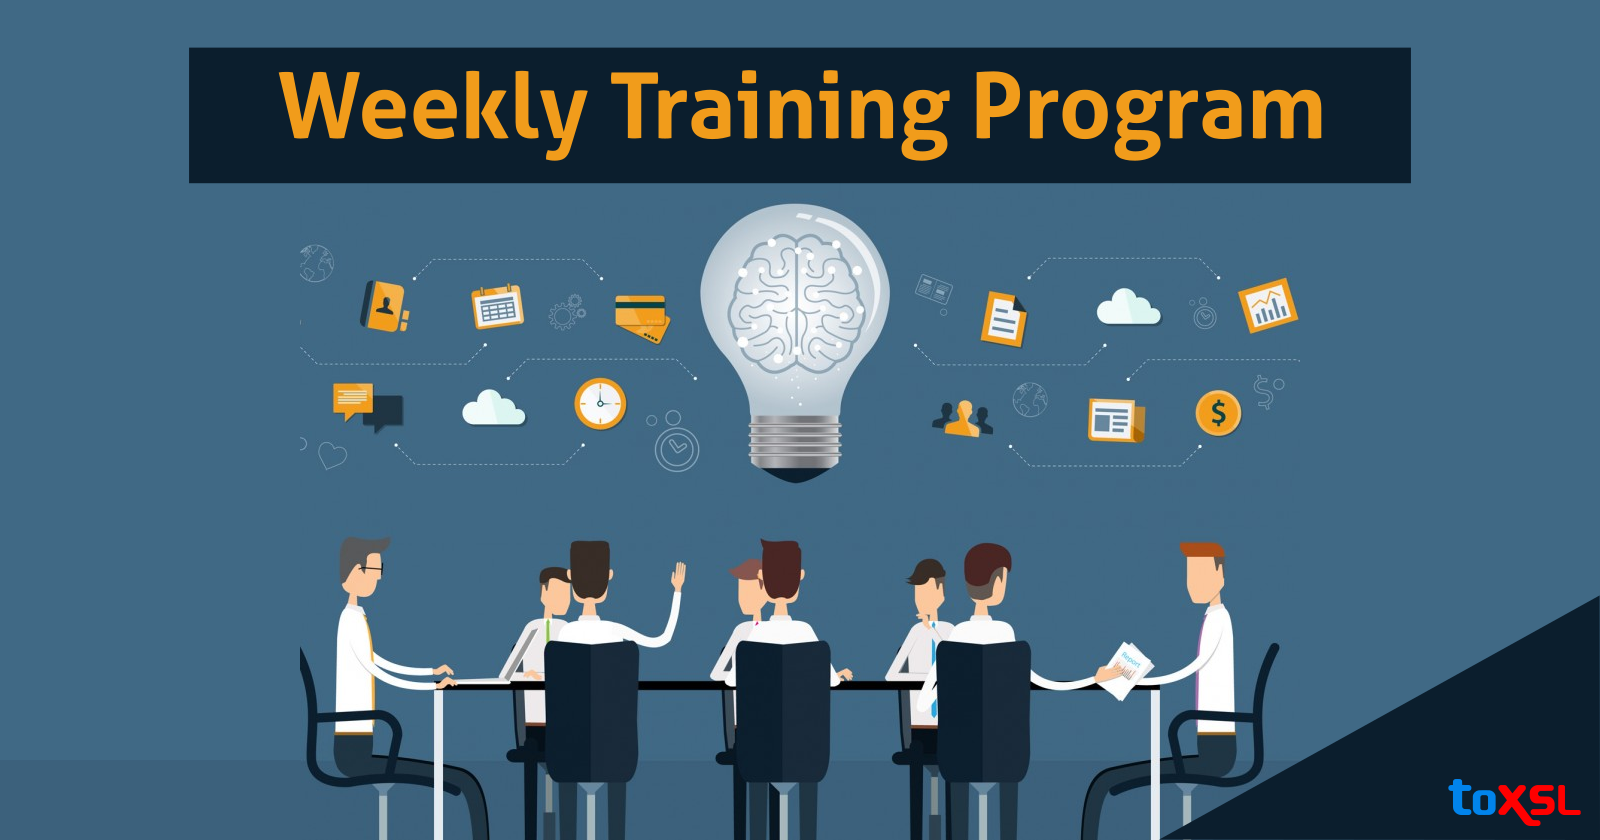 Why ToXSL has Weekly Training Program?